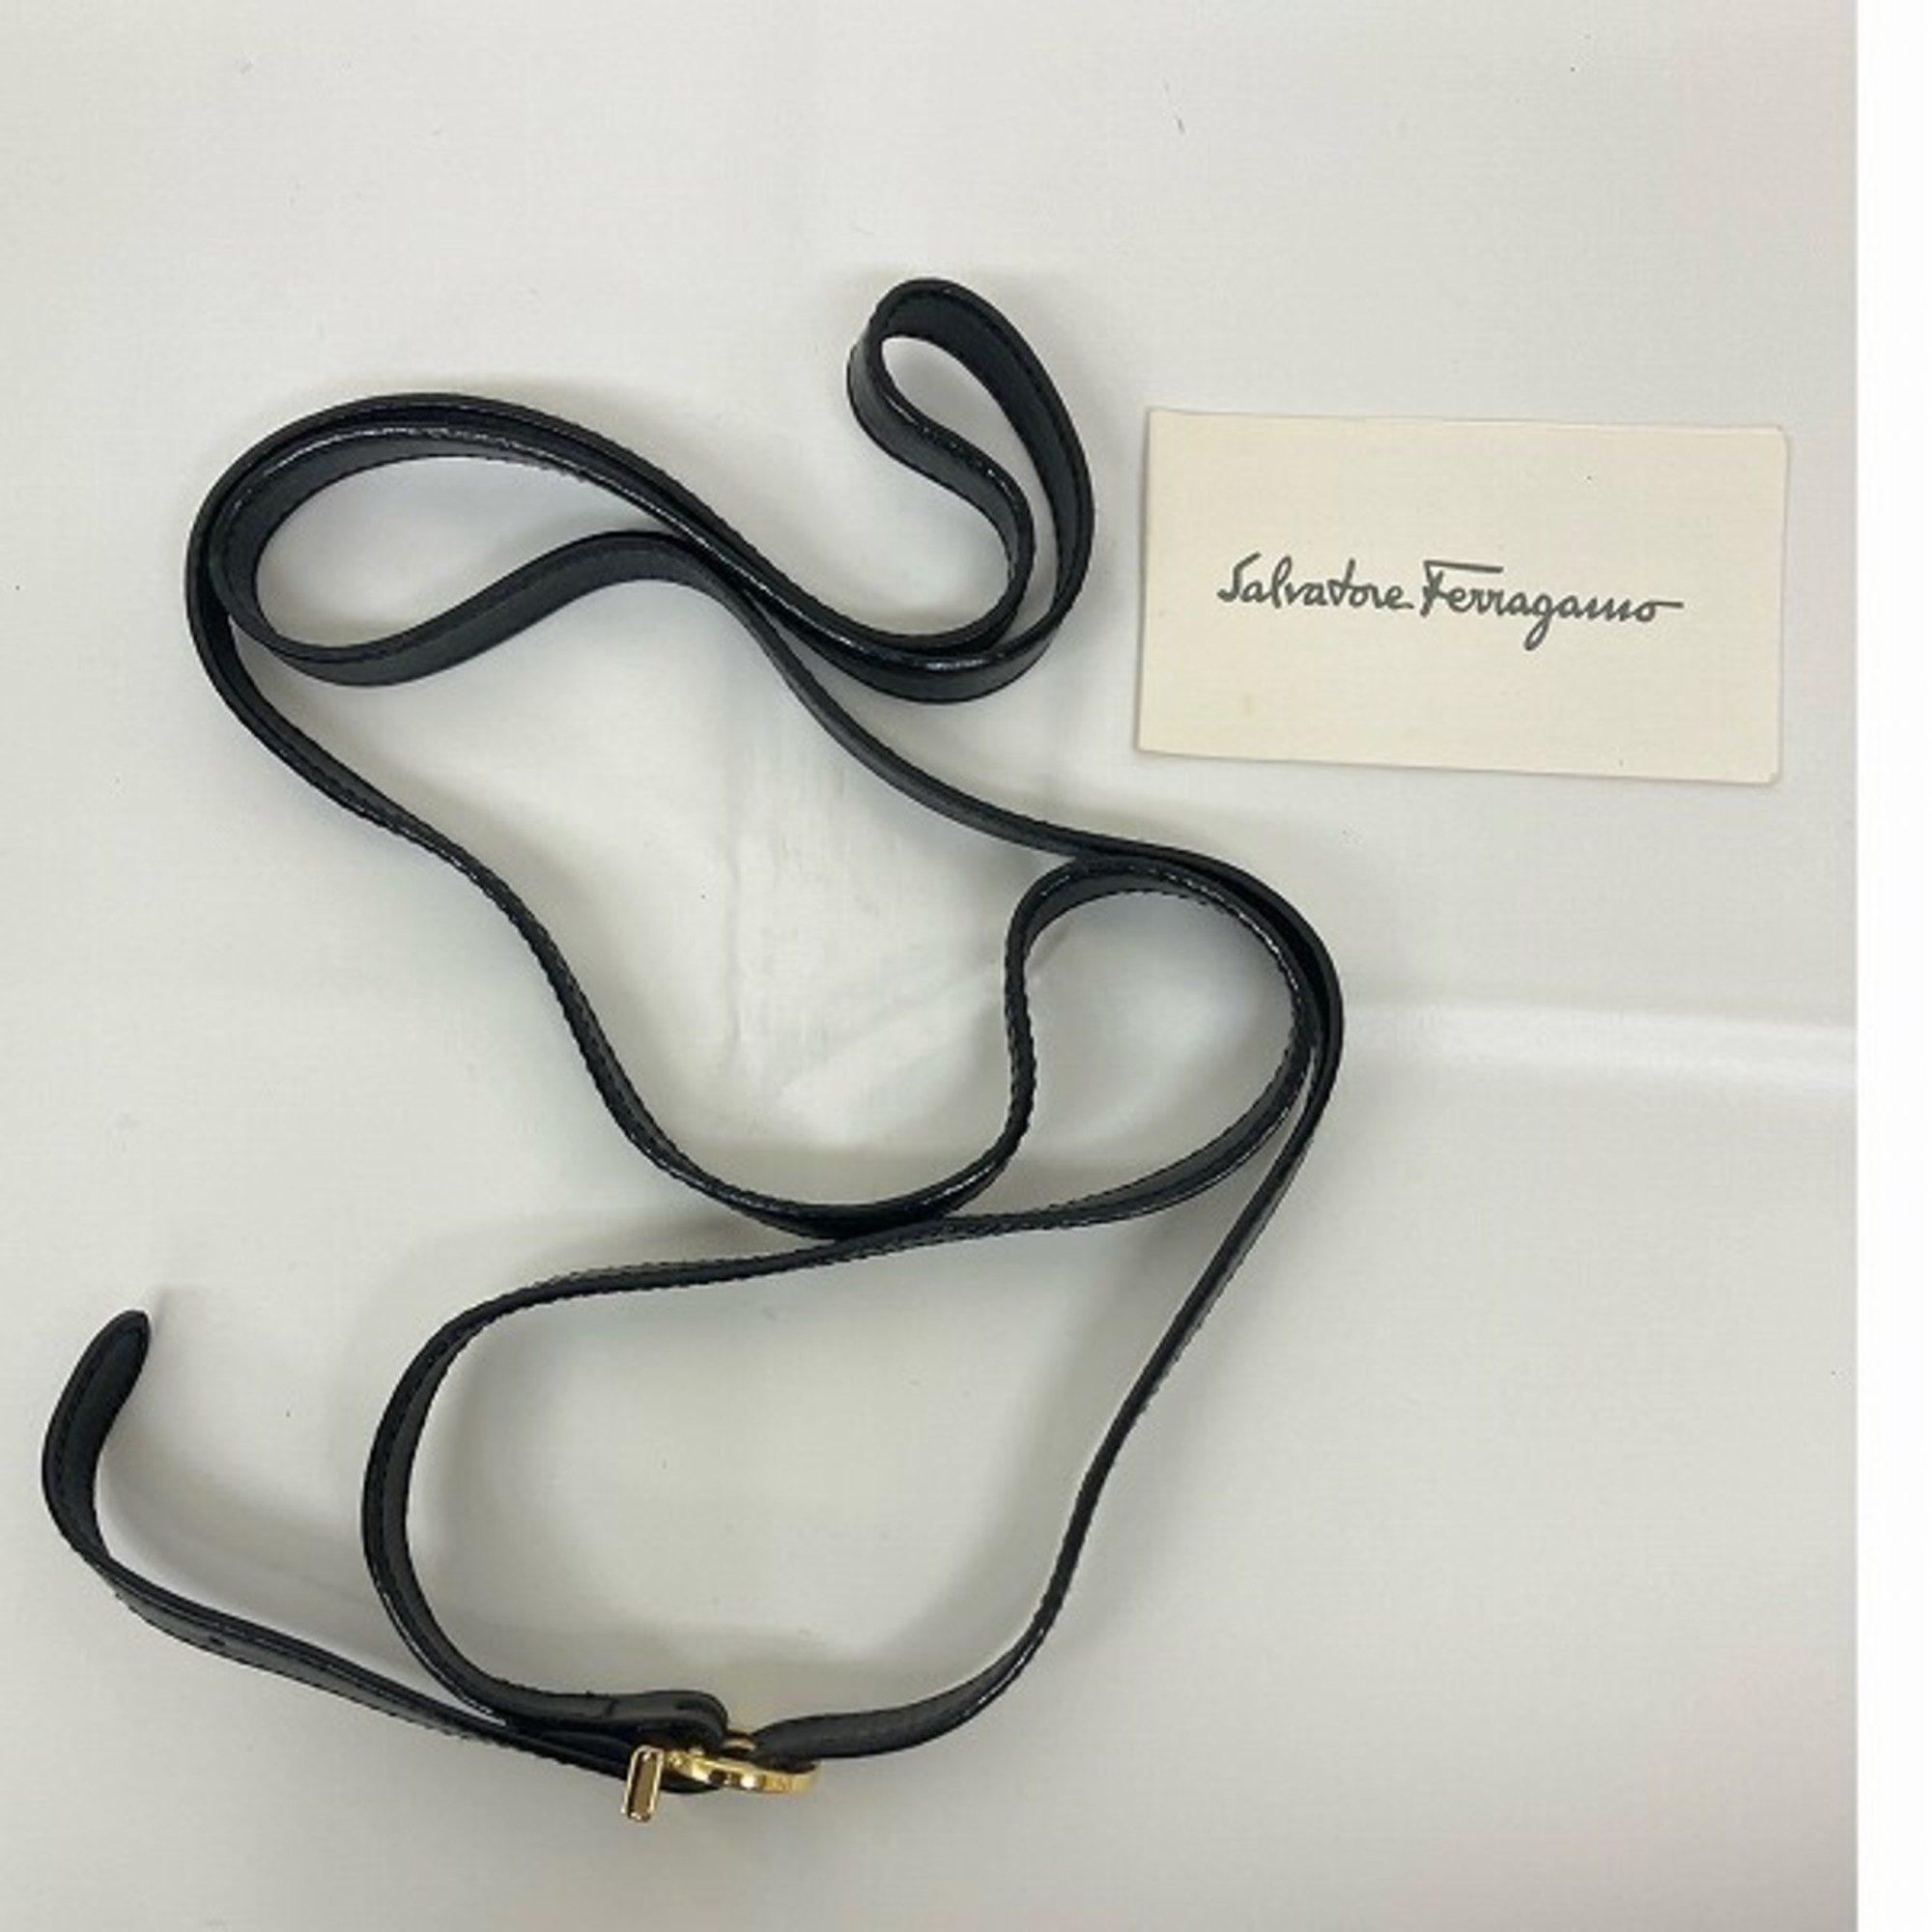 Salvatore Ferragamo Ferragamo AT-21-5677 Vara Ribbon Black Bag Handbag Shoulder Ladies